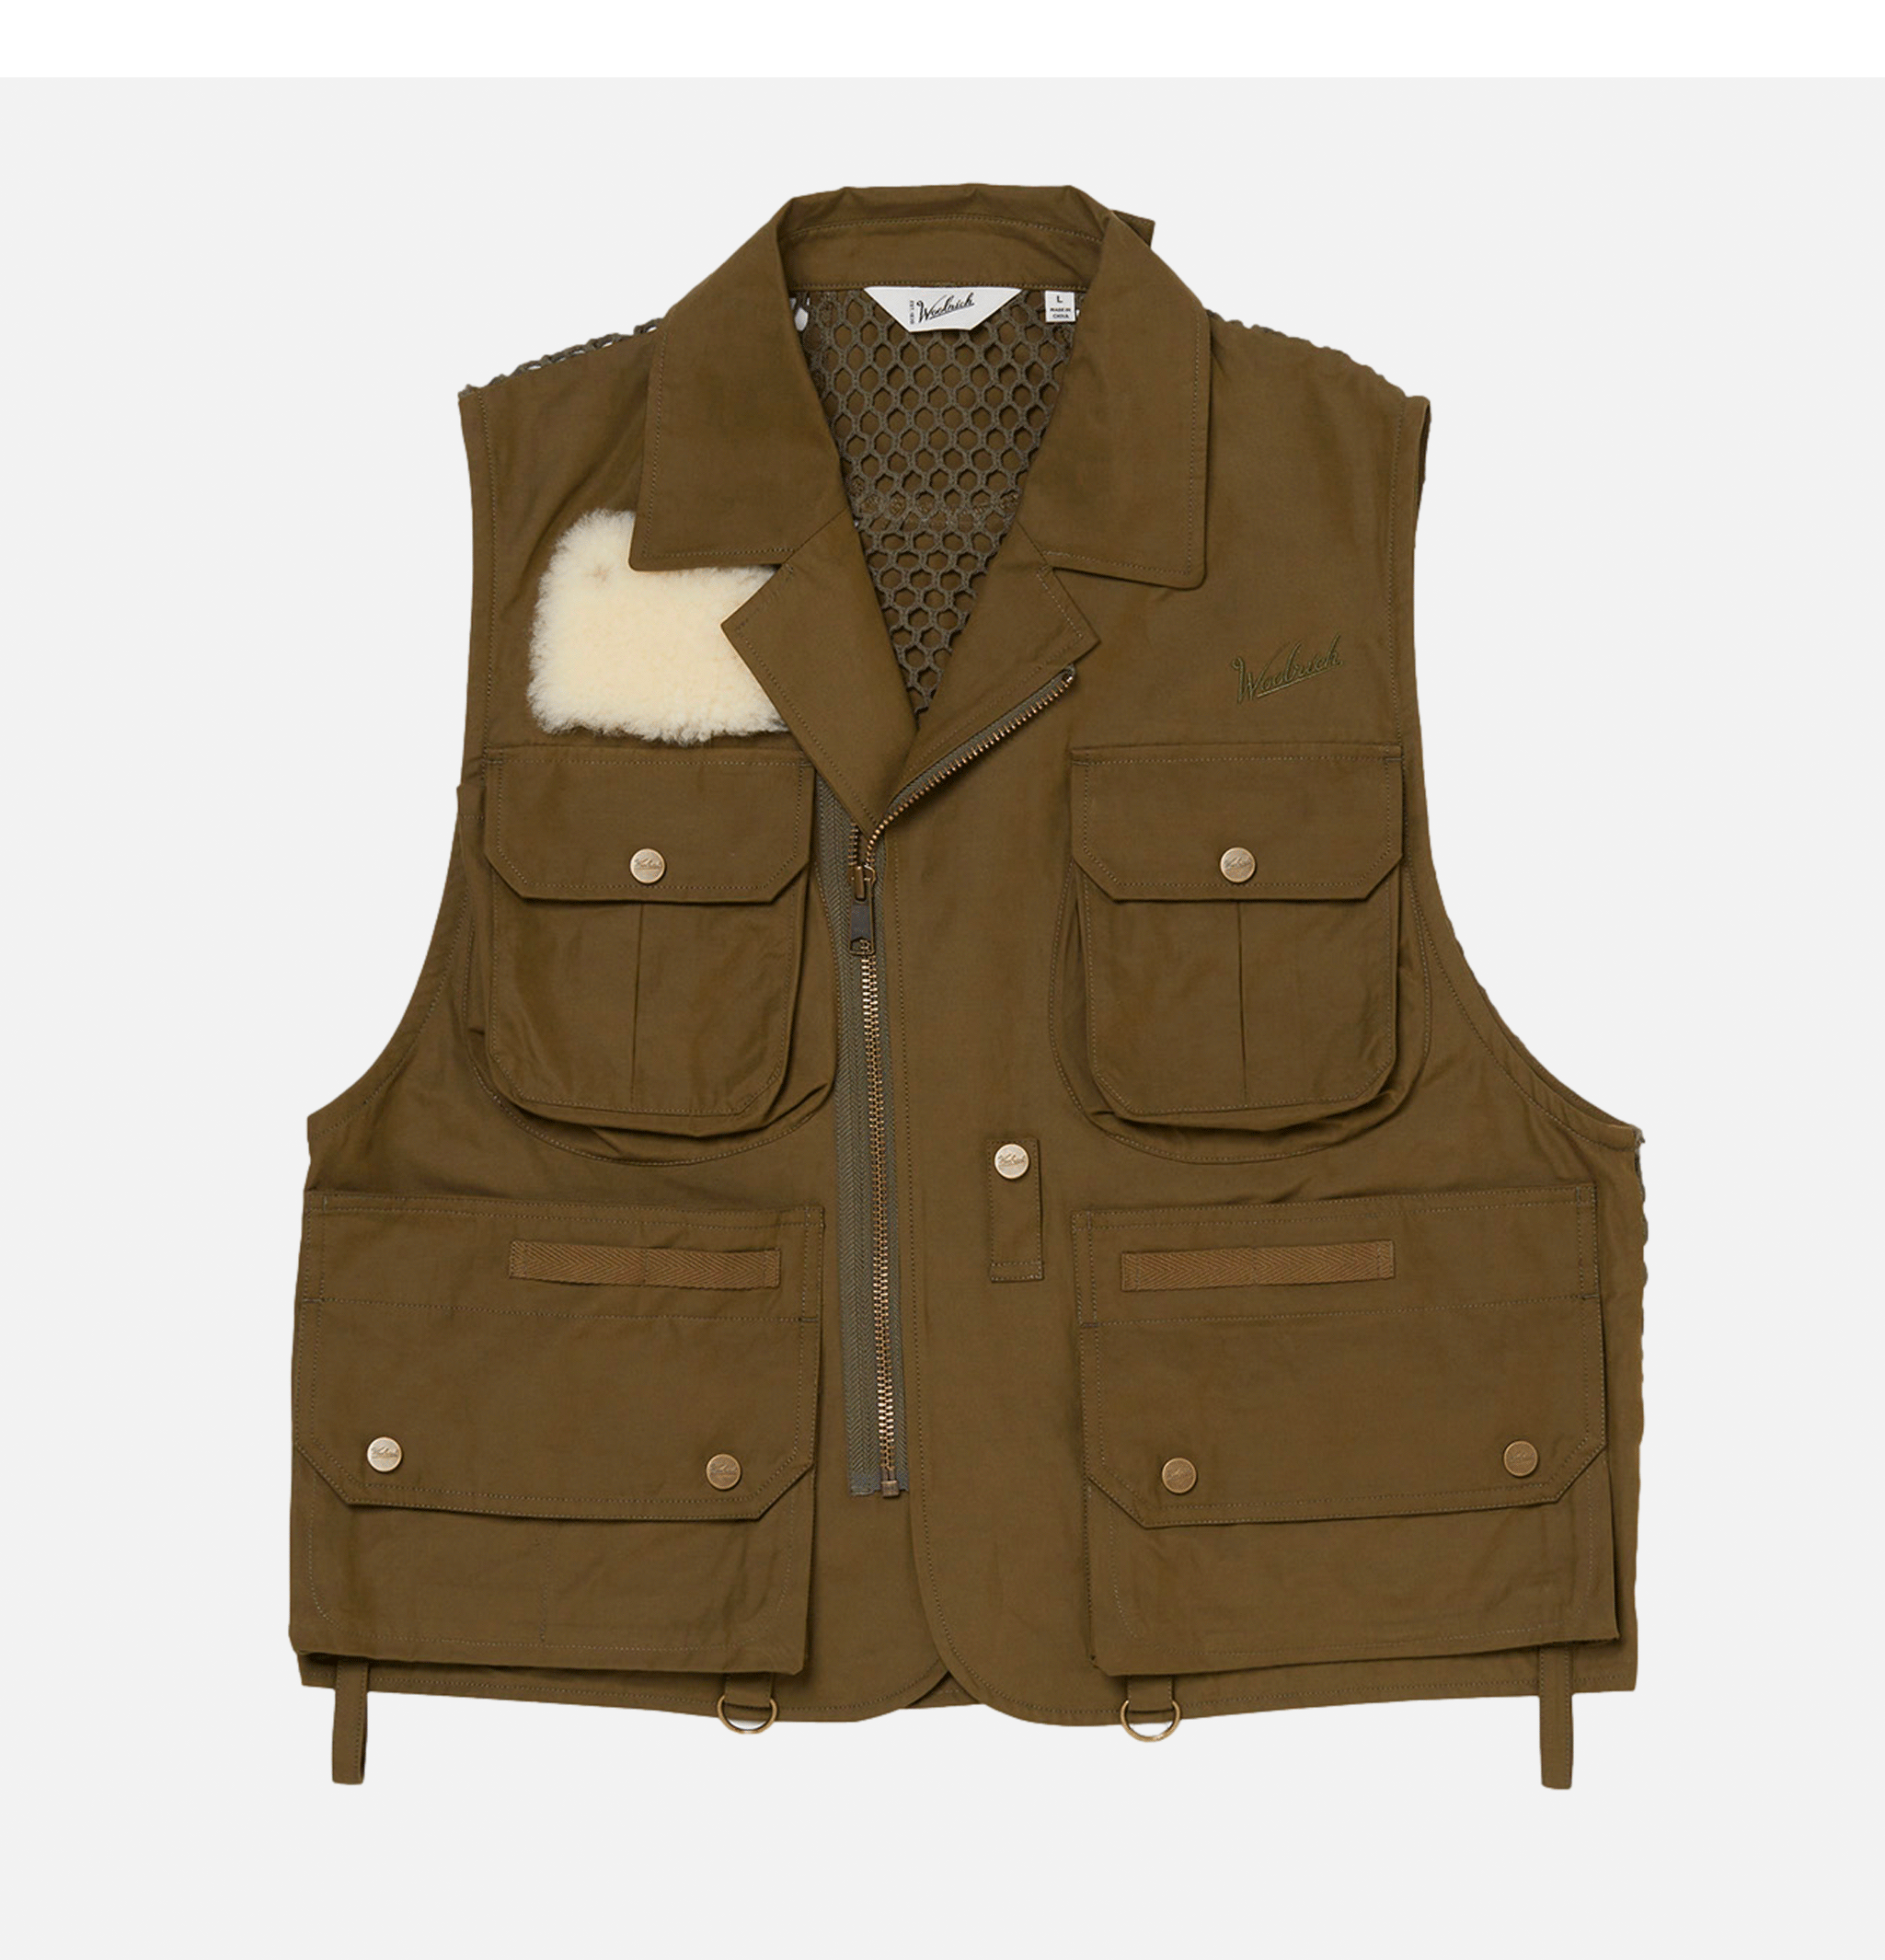 https://www.royalcheese.com/66384/classic-fishing-vest-olive.jpg